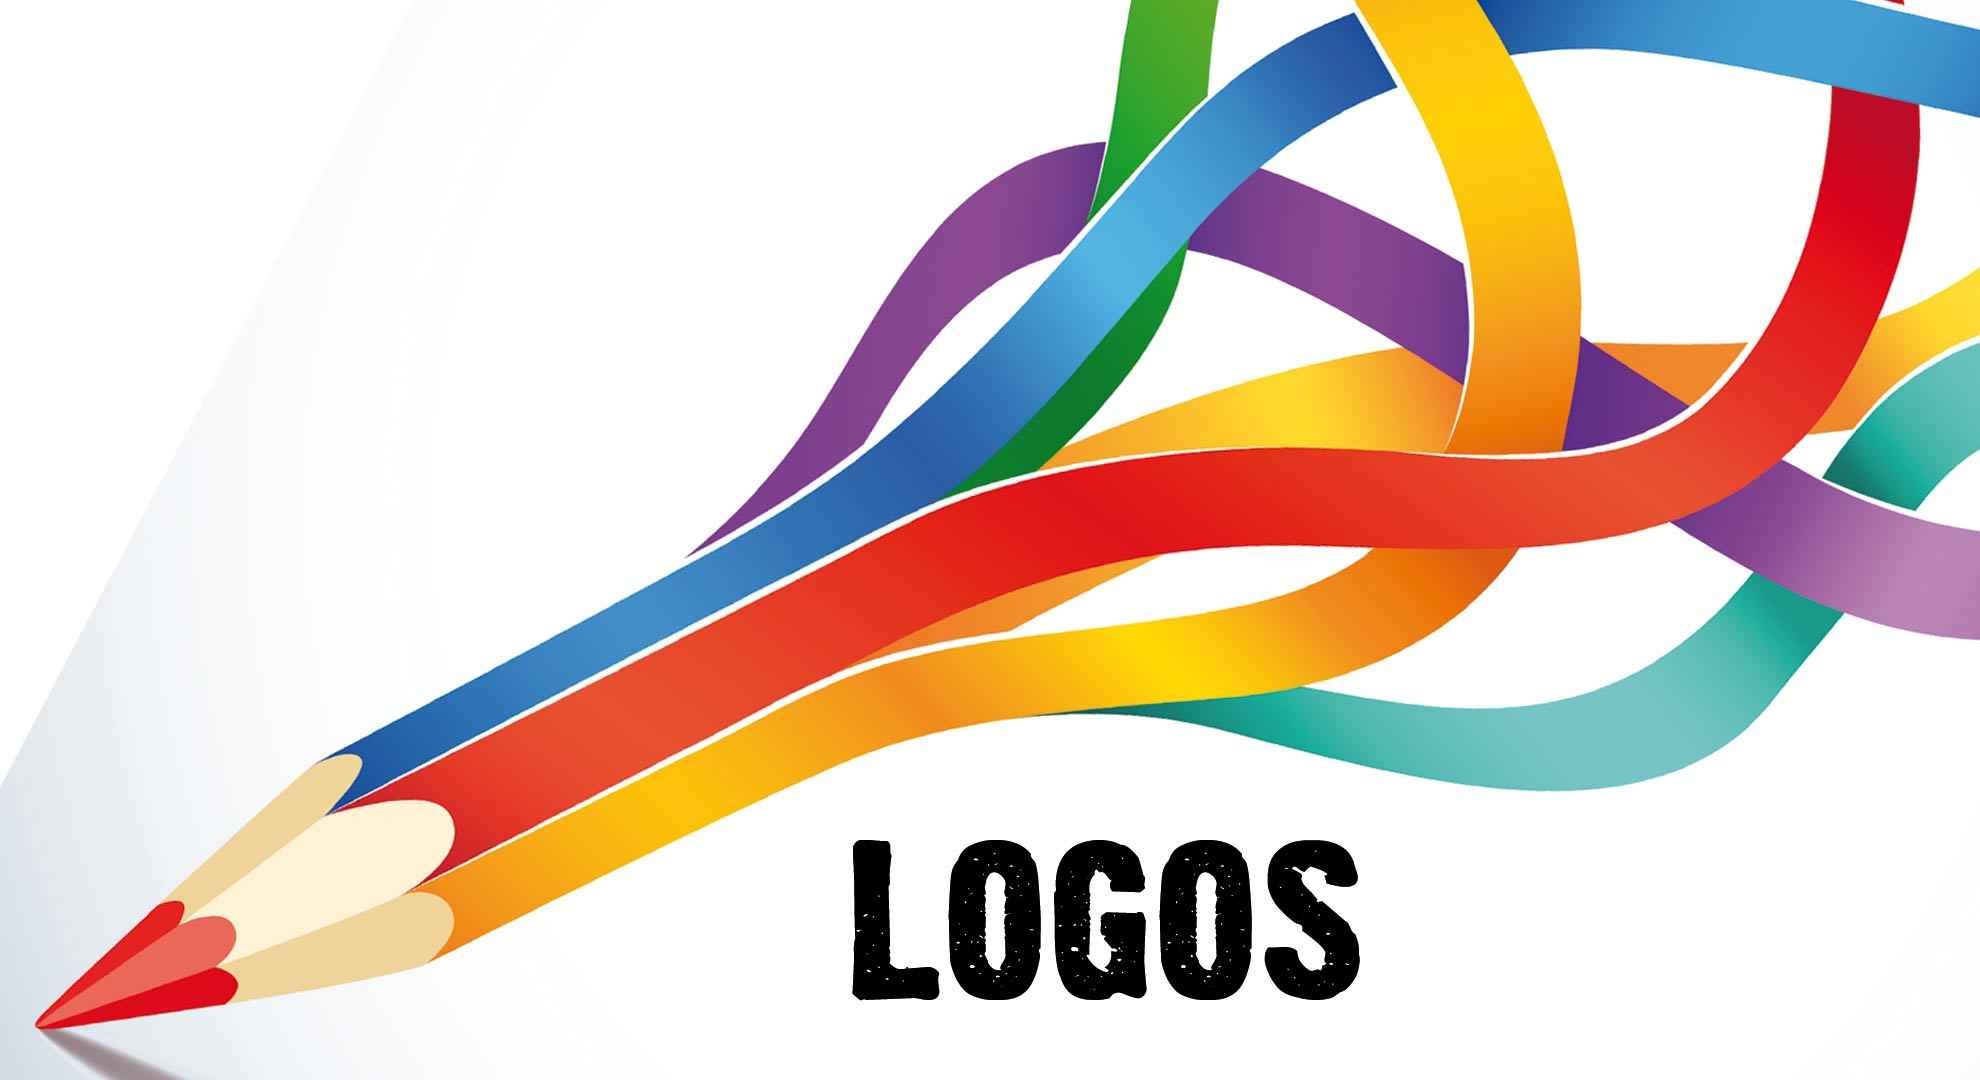 Graphic Company Logo - Professional Logo Design by Bethel Signs & Graphics, Marietta, GA